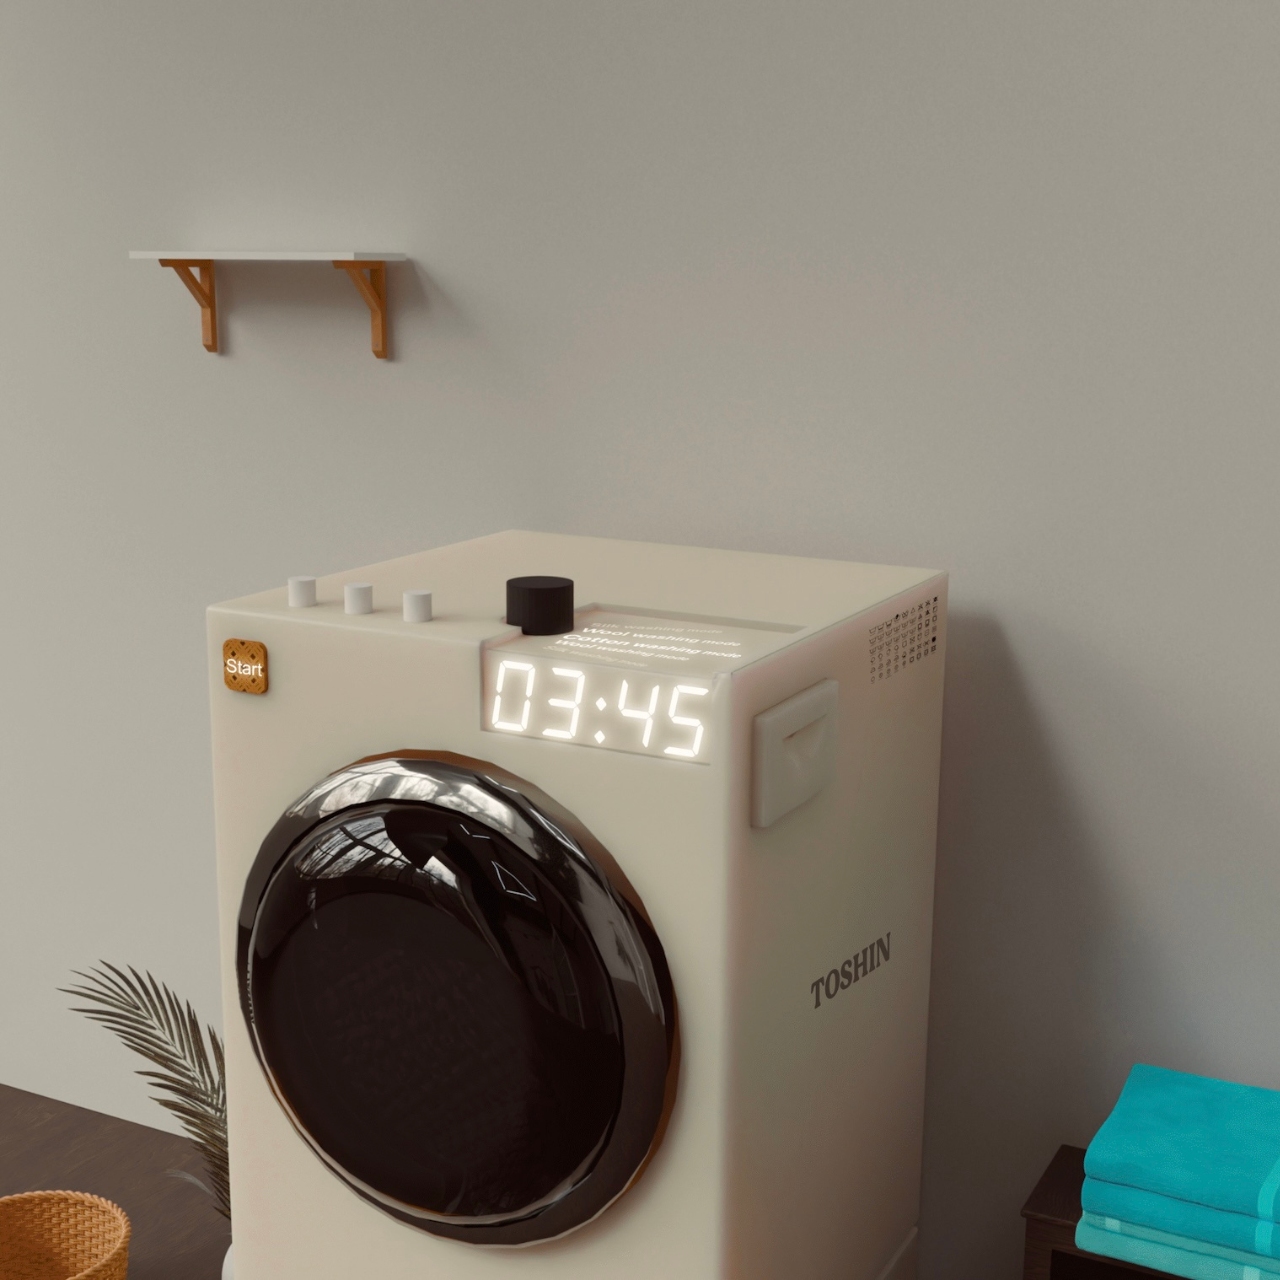 Retro-looking automatic washing machine brings smart washing functions